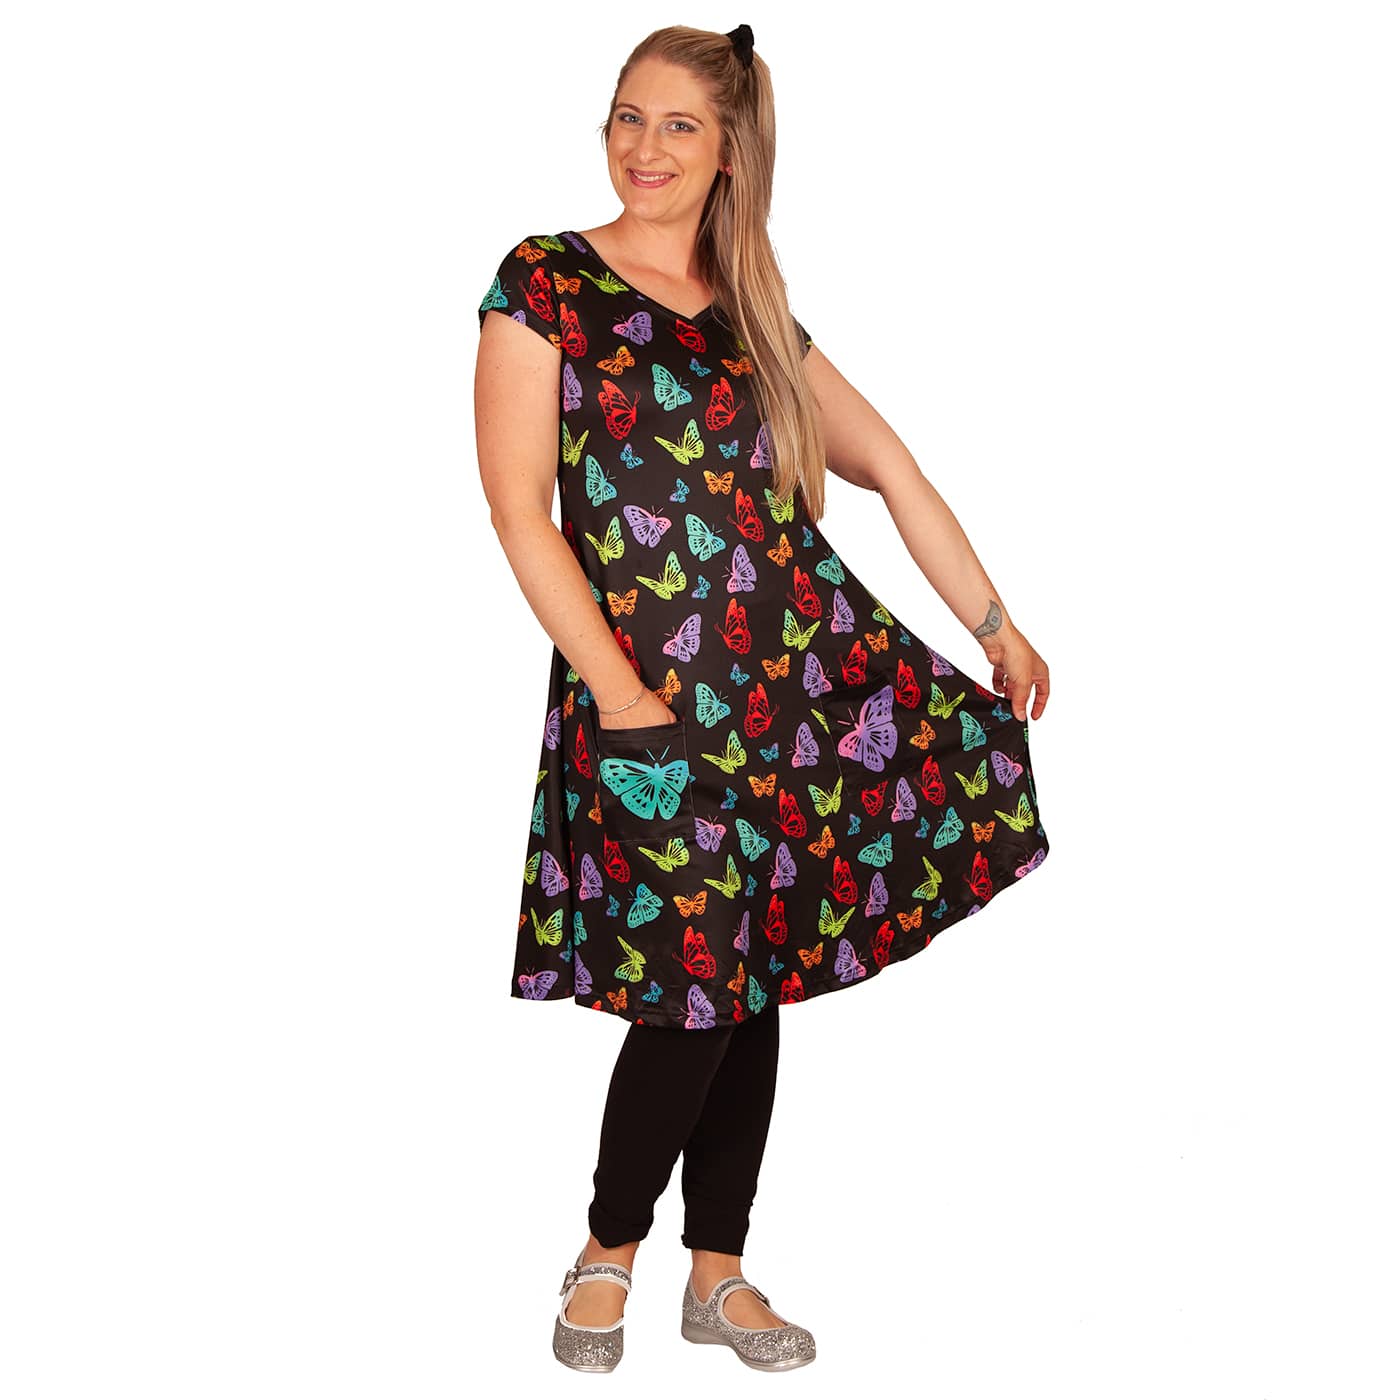 Kaleidoscope Tunic Dress by RainbowsAndFairies.com.au (Monarch Butterfly - Rainbow - Kitsch - Dress With Pockets - Mod Retro - Vintage Inspired) - SKU: CL_TUNDR_KSCOP_ORG - Pic-04